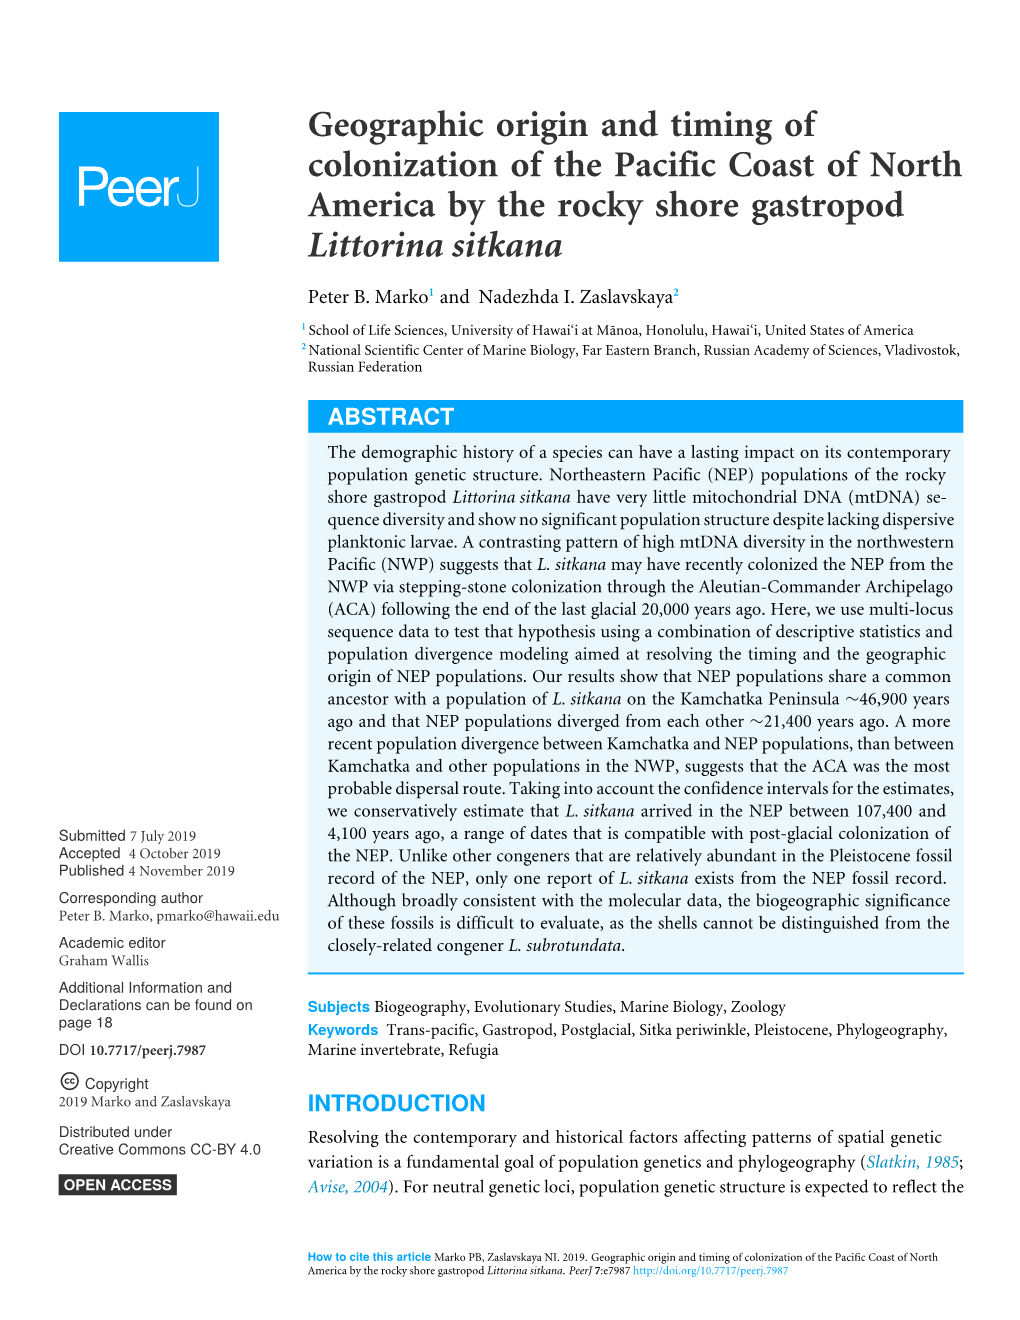 Geographic Origin and Timing of Colonization of the Pacific Coast of North America by the Rocky Shore Gastropod Littorina Sitkana